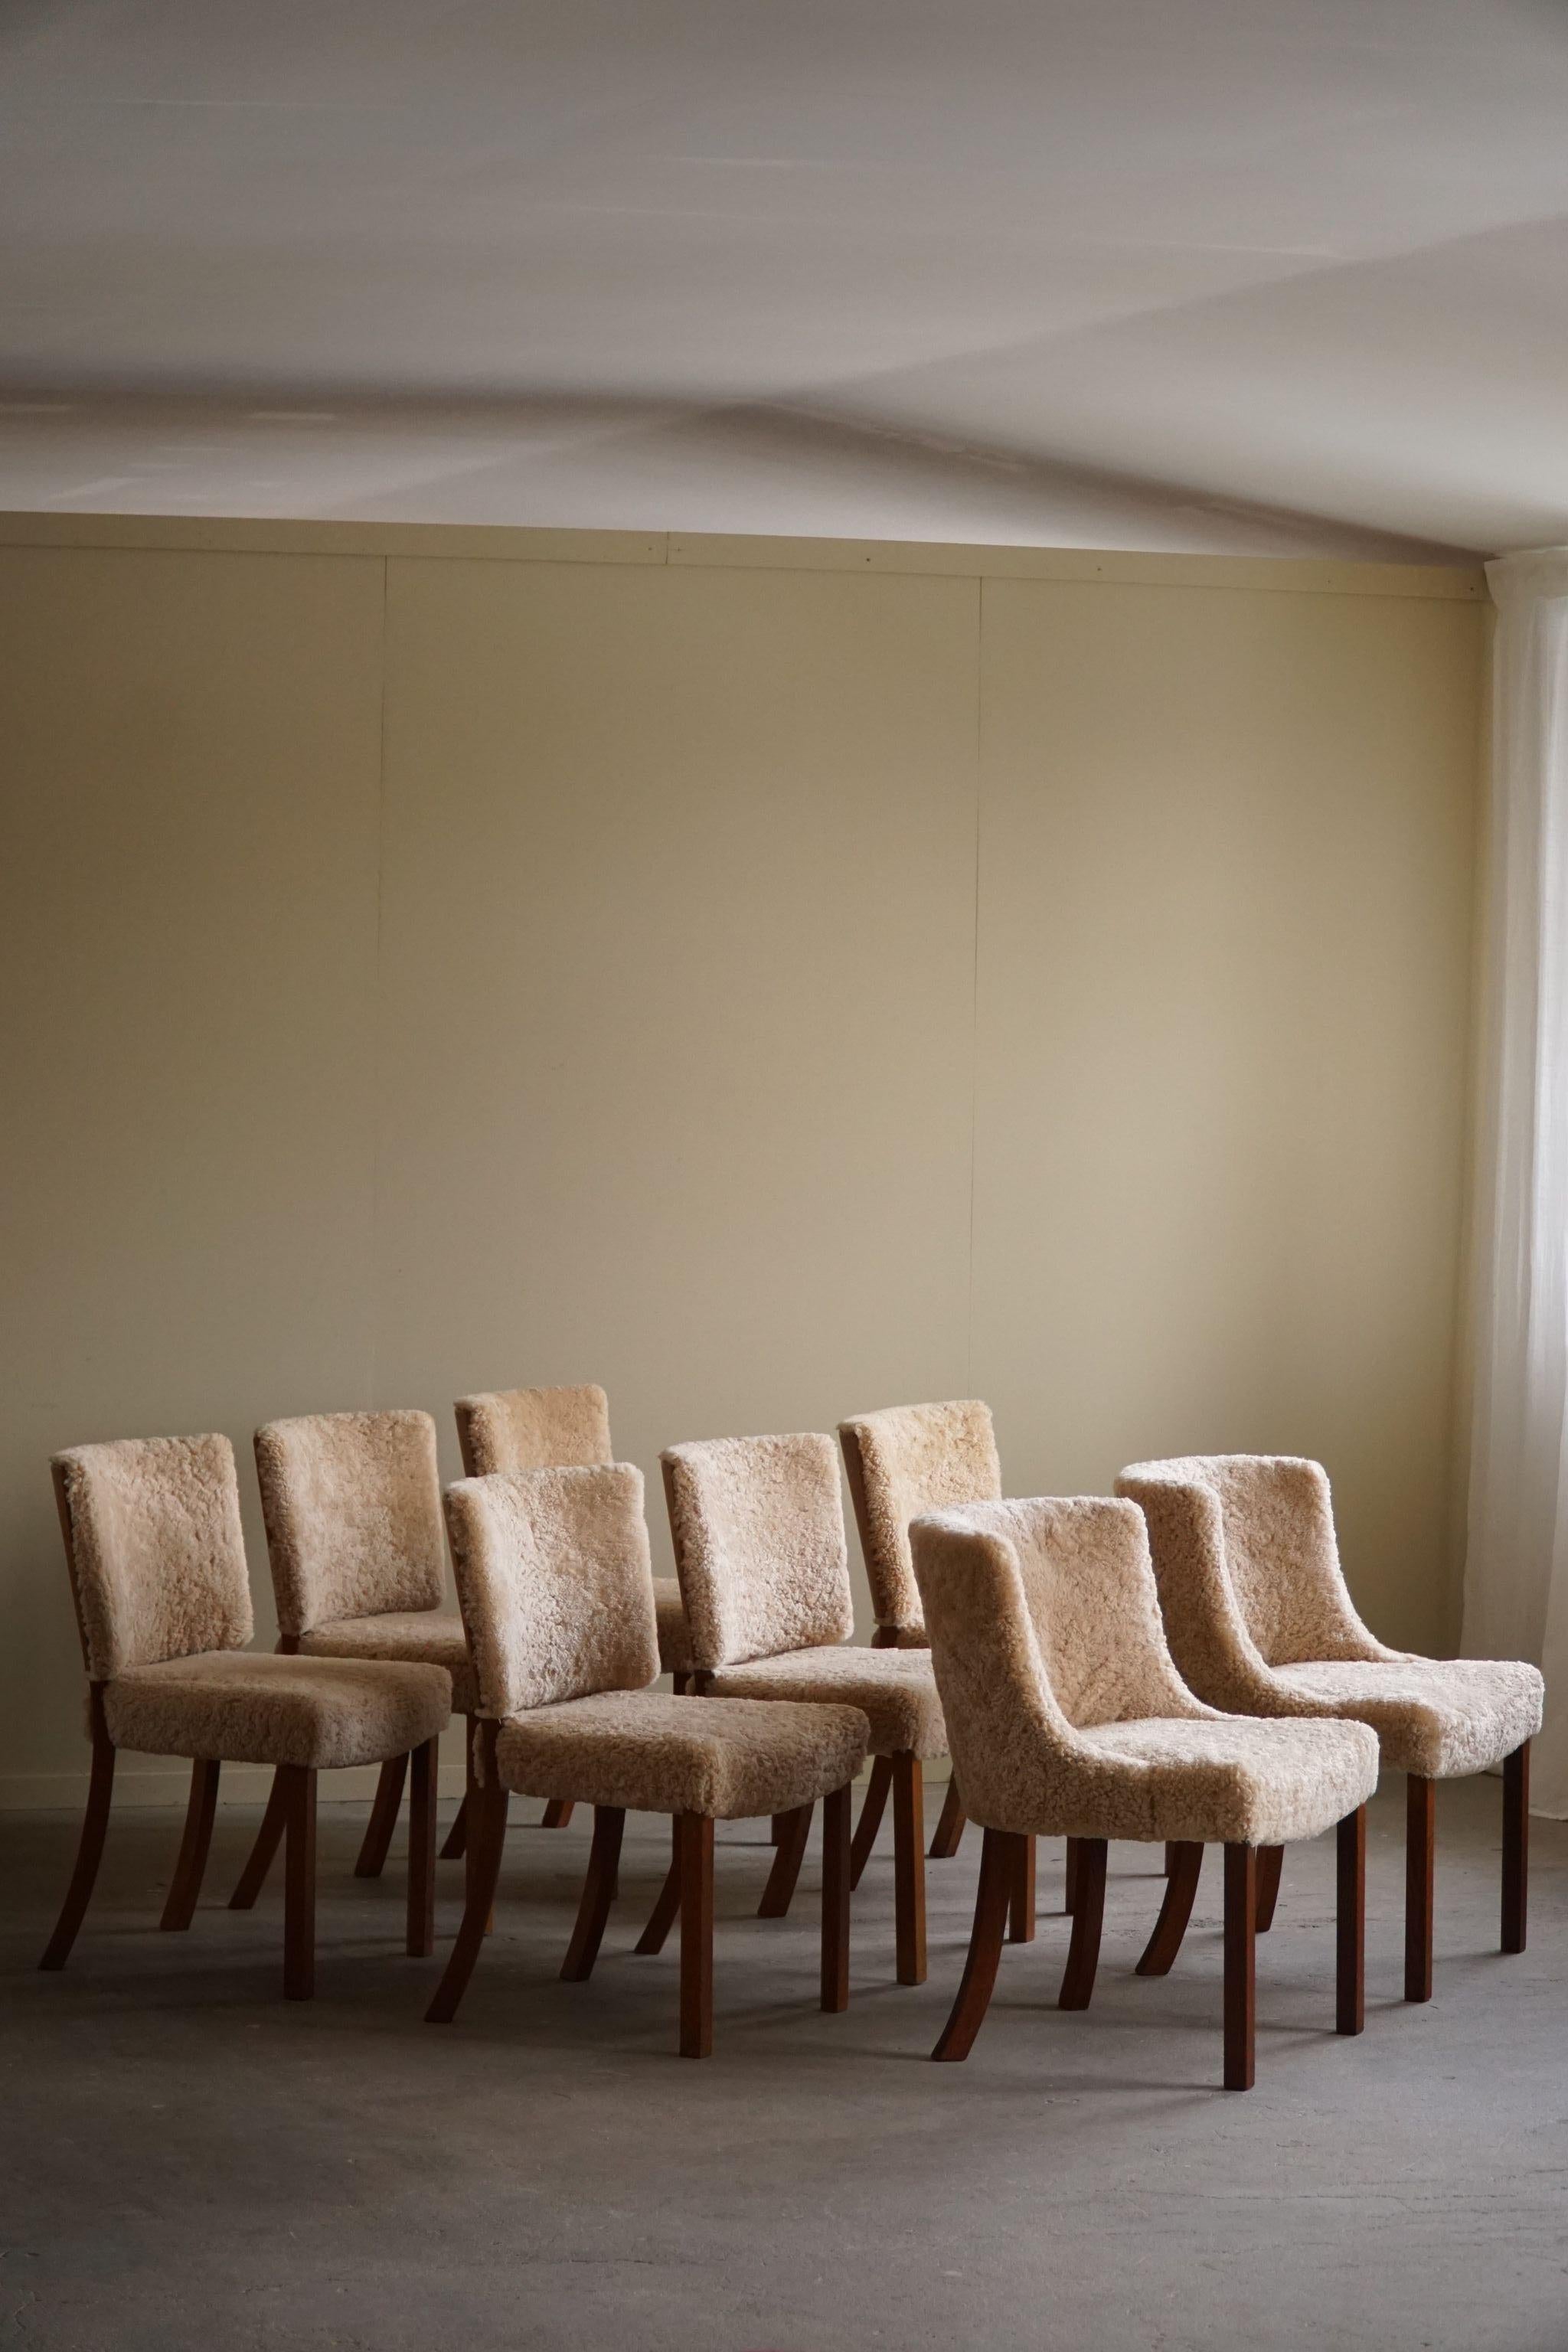 A set of 8 Dining Chairs in Oak and Lambswool, Danish Modern, Kaj Gottlob, 1950s For Sale 9